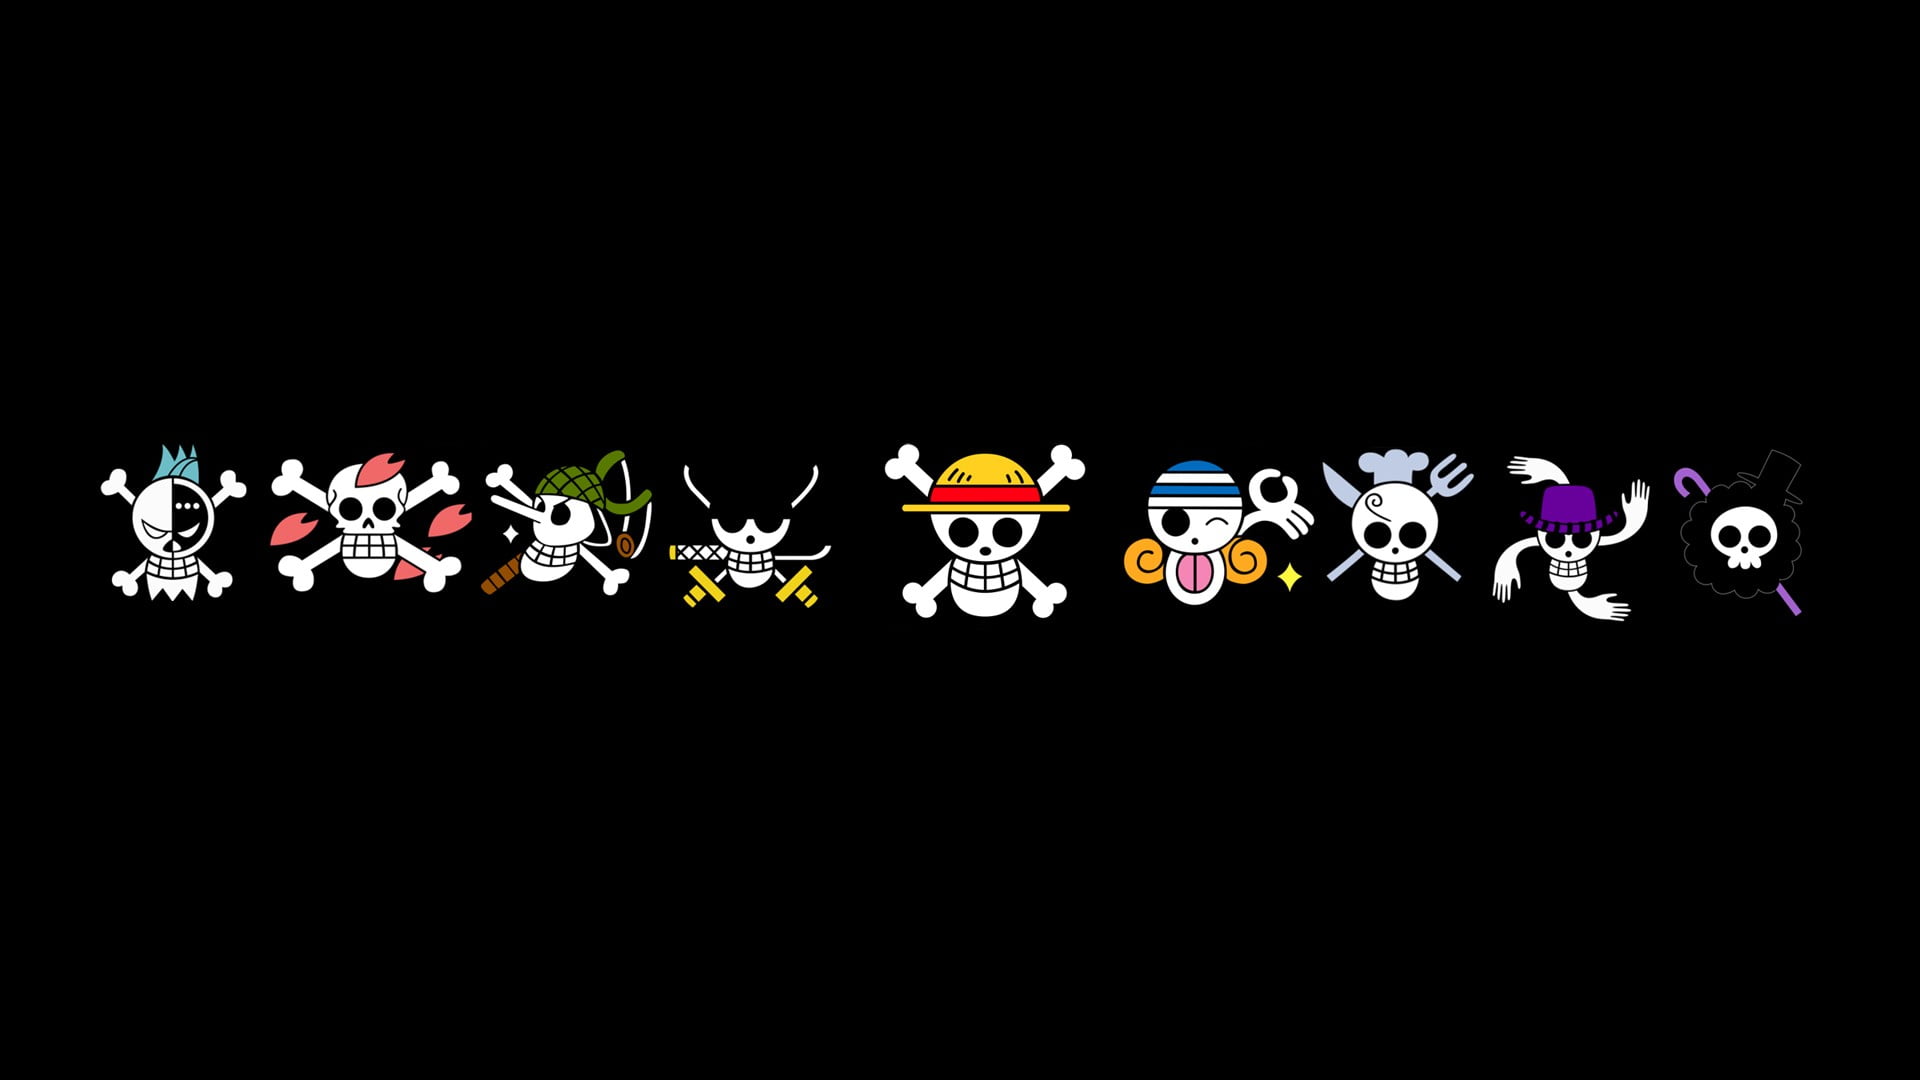 One Piece logo, anime, skull, black background, copy space, studio shot